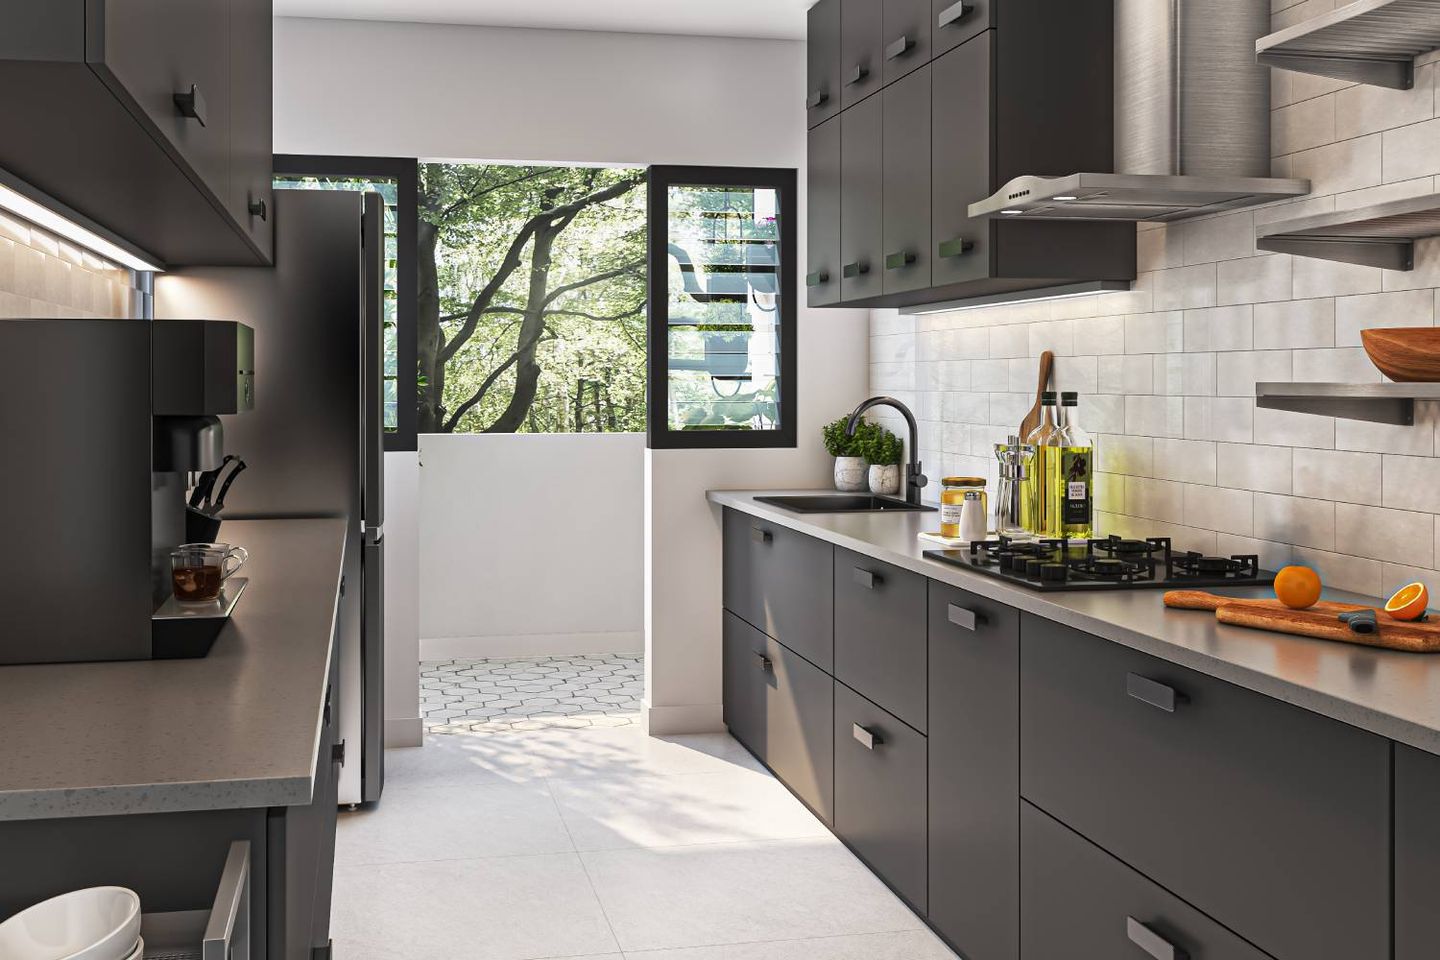 Parallel Kitchen Design With Black Storage Cabinets - Livspace